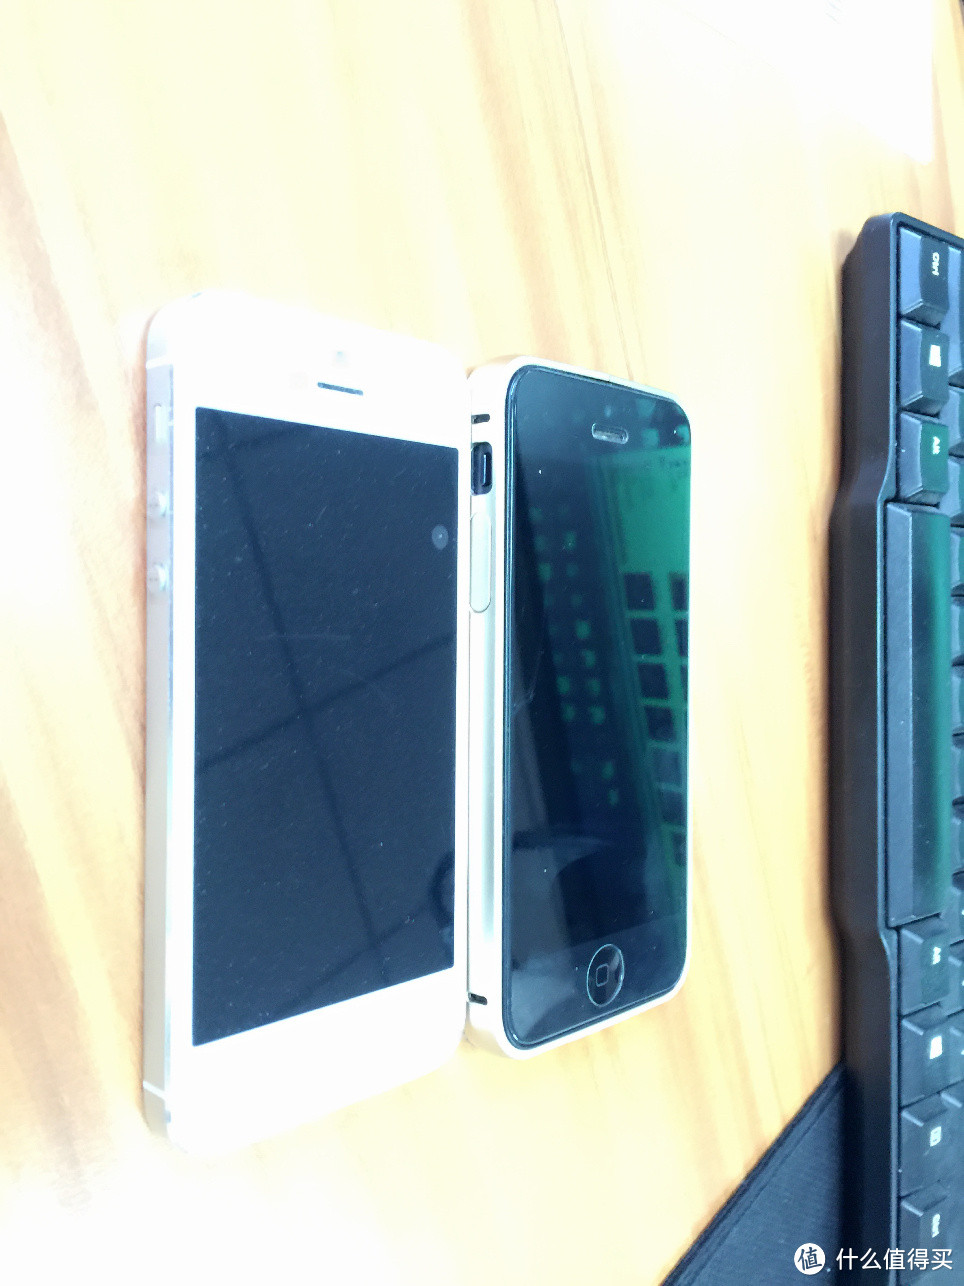 KUKE 酷壳 智能手机壳 充电版（适用于iPhone 5/5s ）